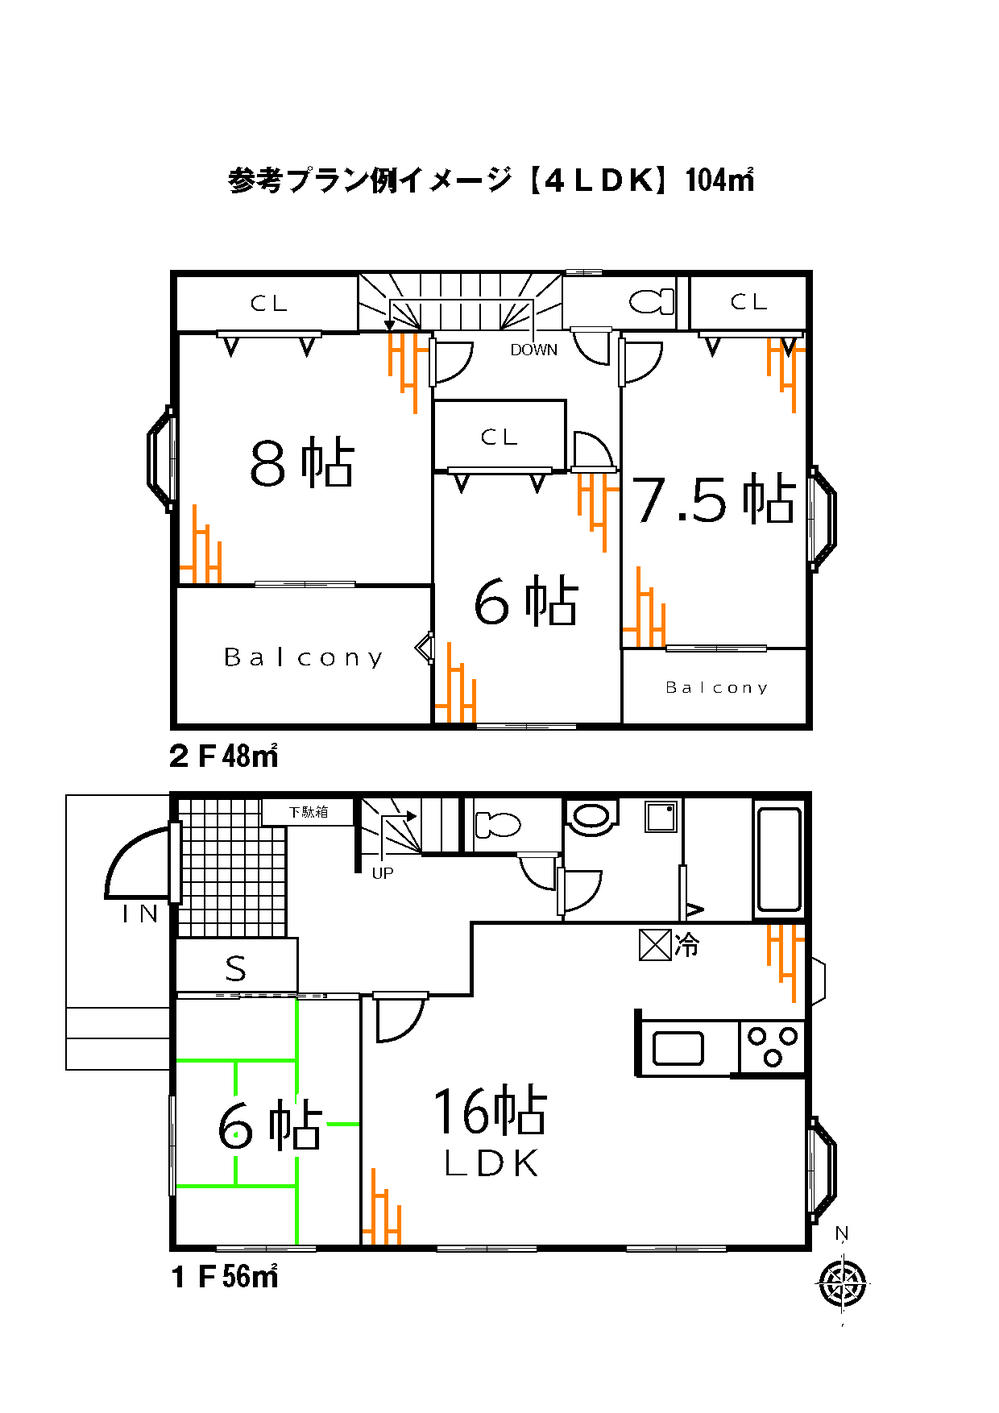 Floor plan. 16.5 million yen, 4LDK, Land area 203 sq m , Building area 105 sq m plan example